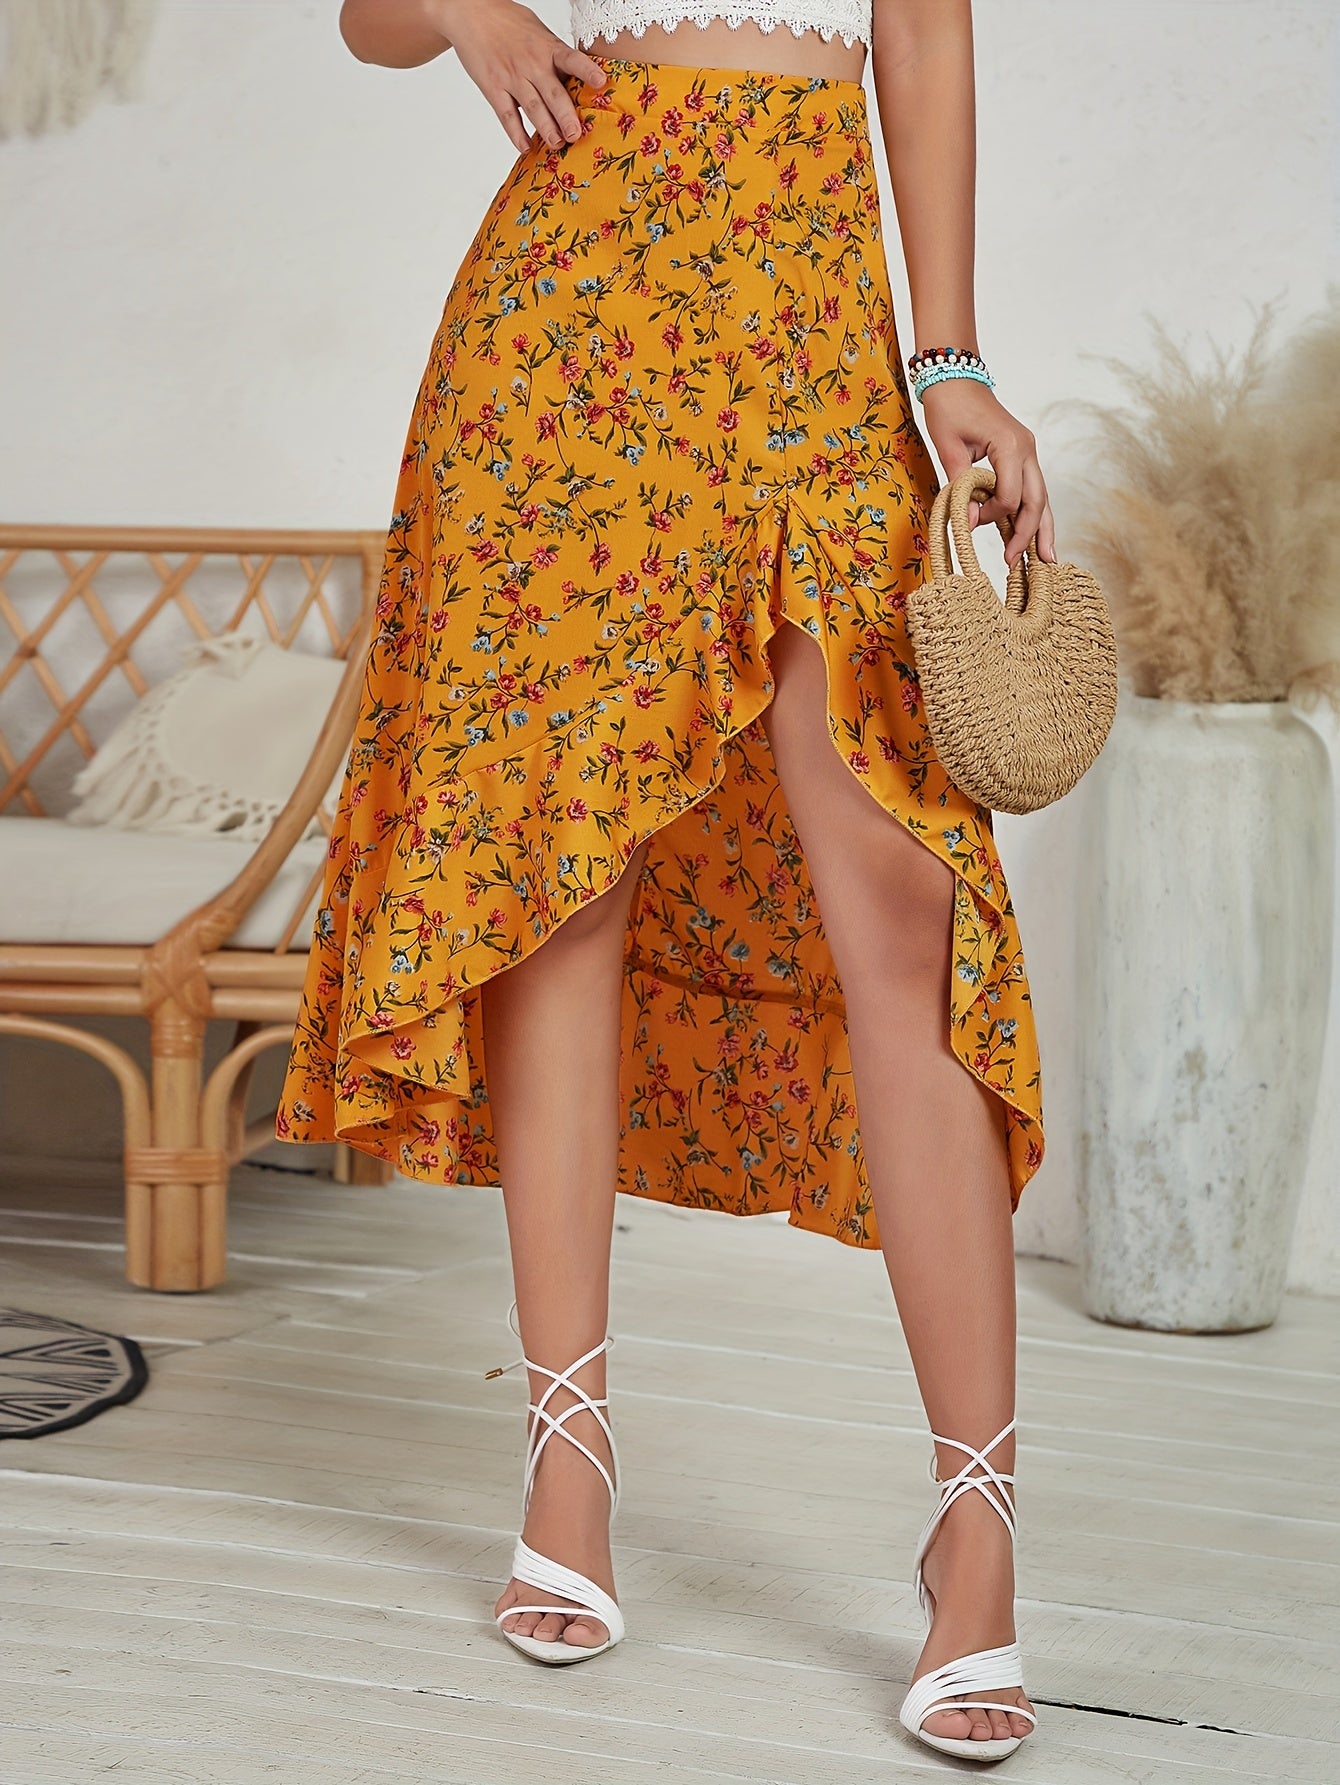 vlovelaw  Floral Print High Waist Skirt, Cute Asymmetrical Skirt For Spring & Summer, Women's Clothing